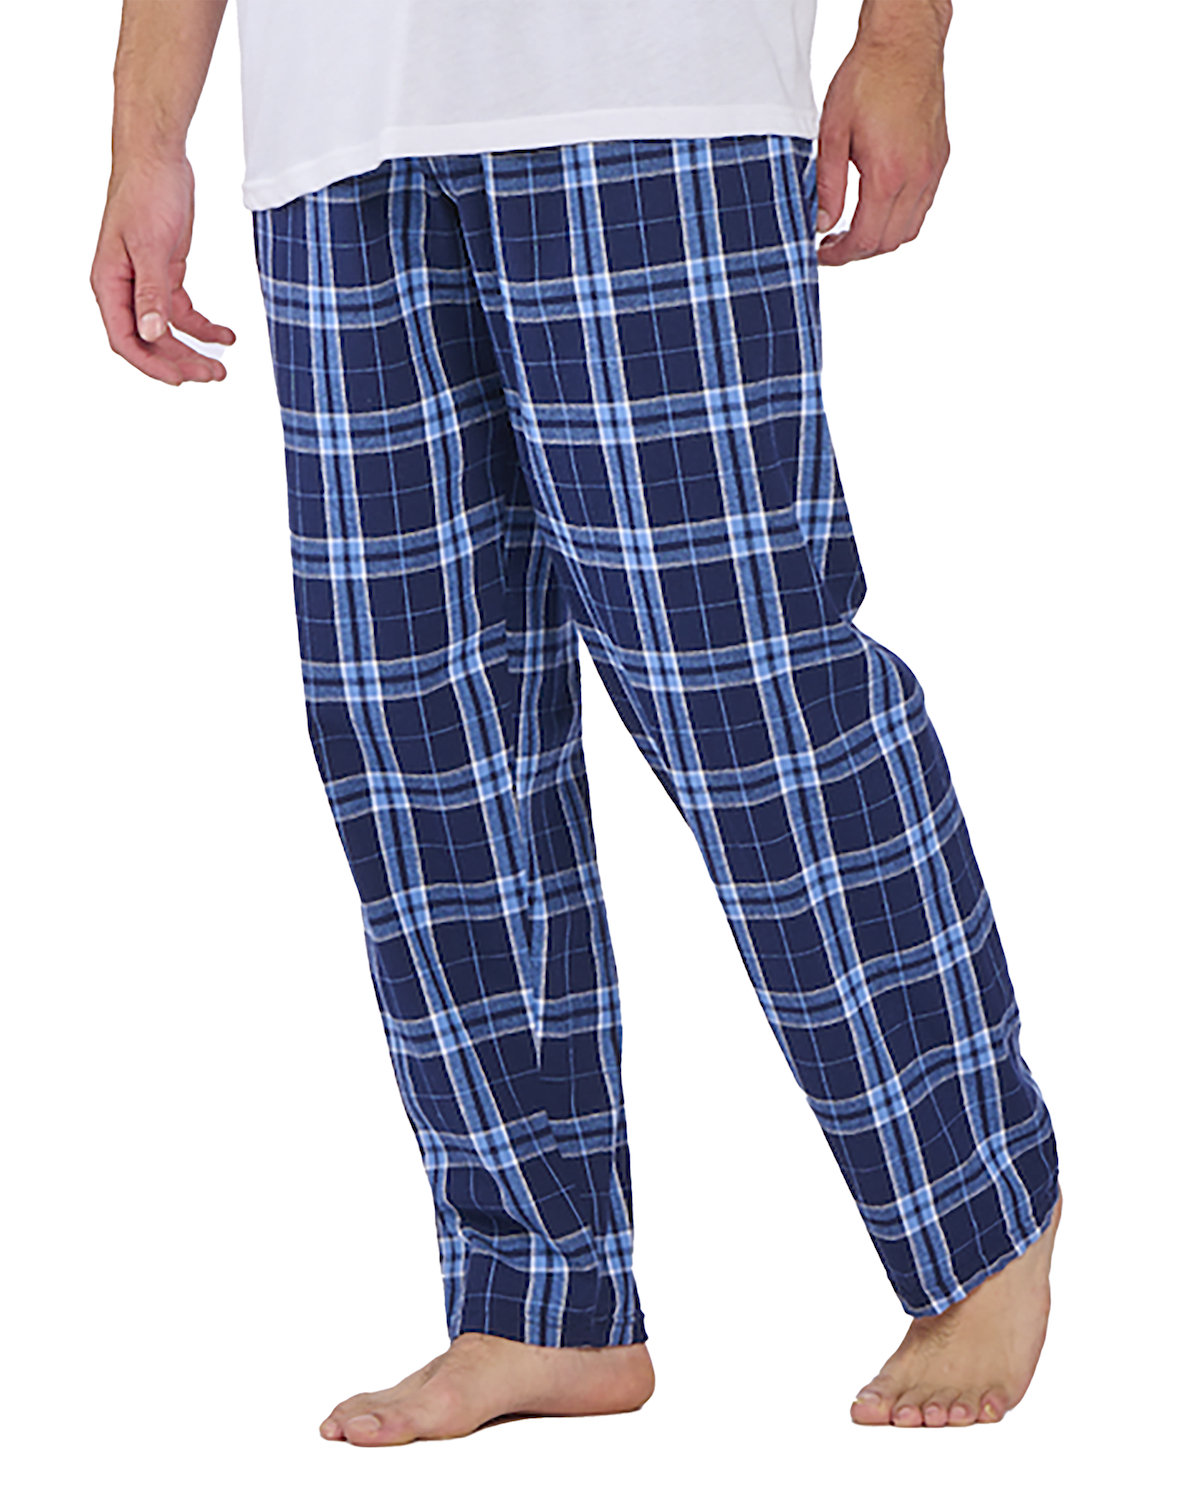 Pocket Pajama Pants 